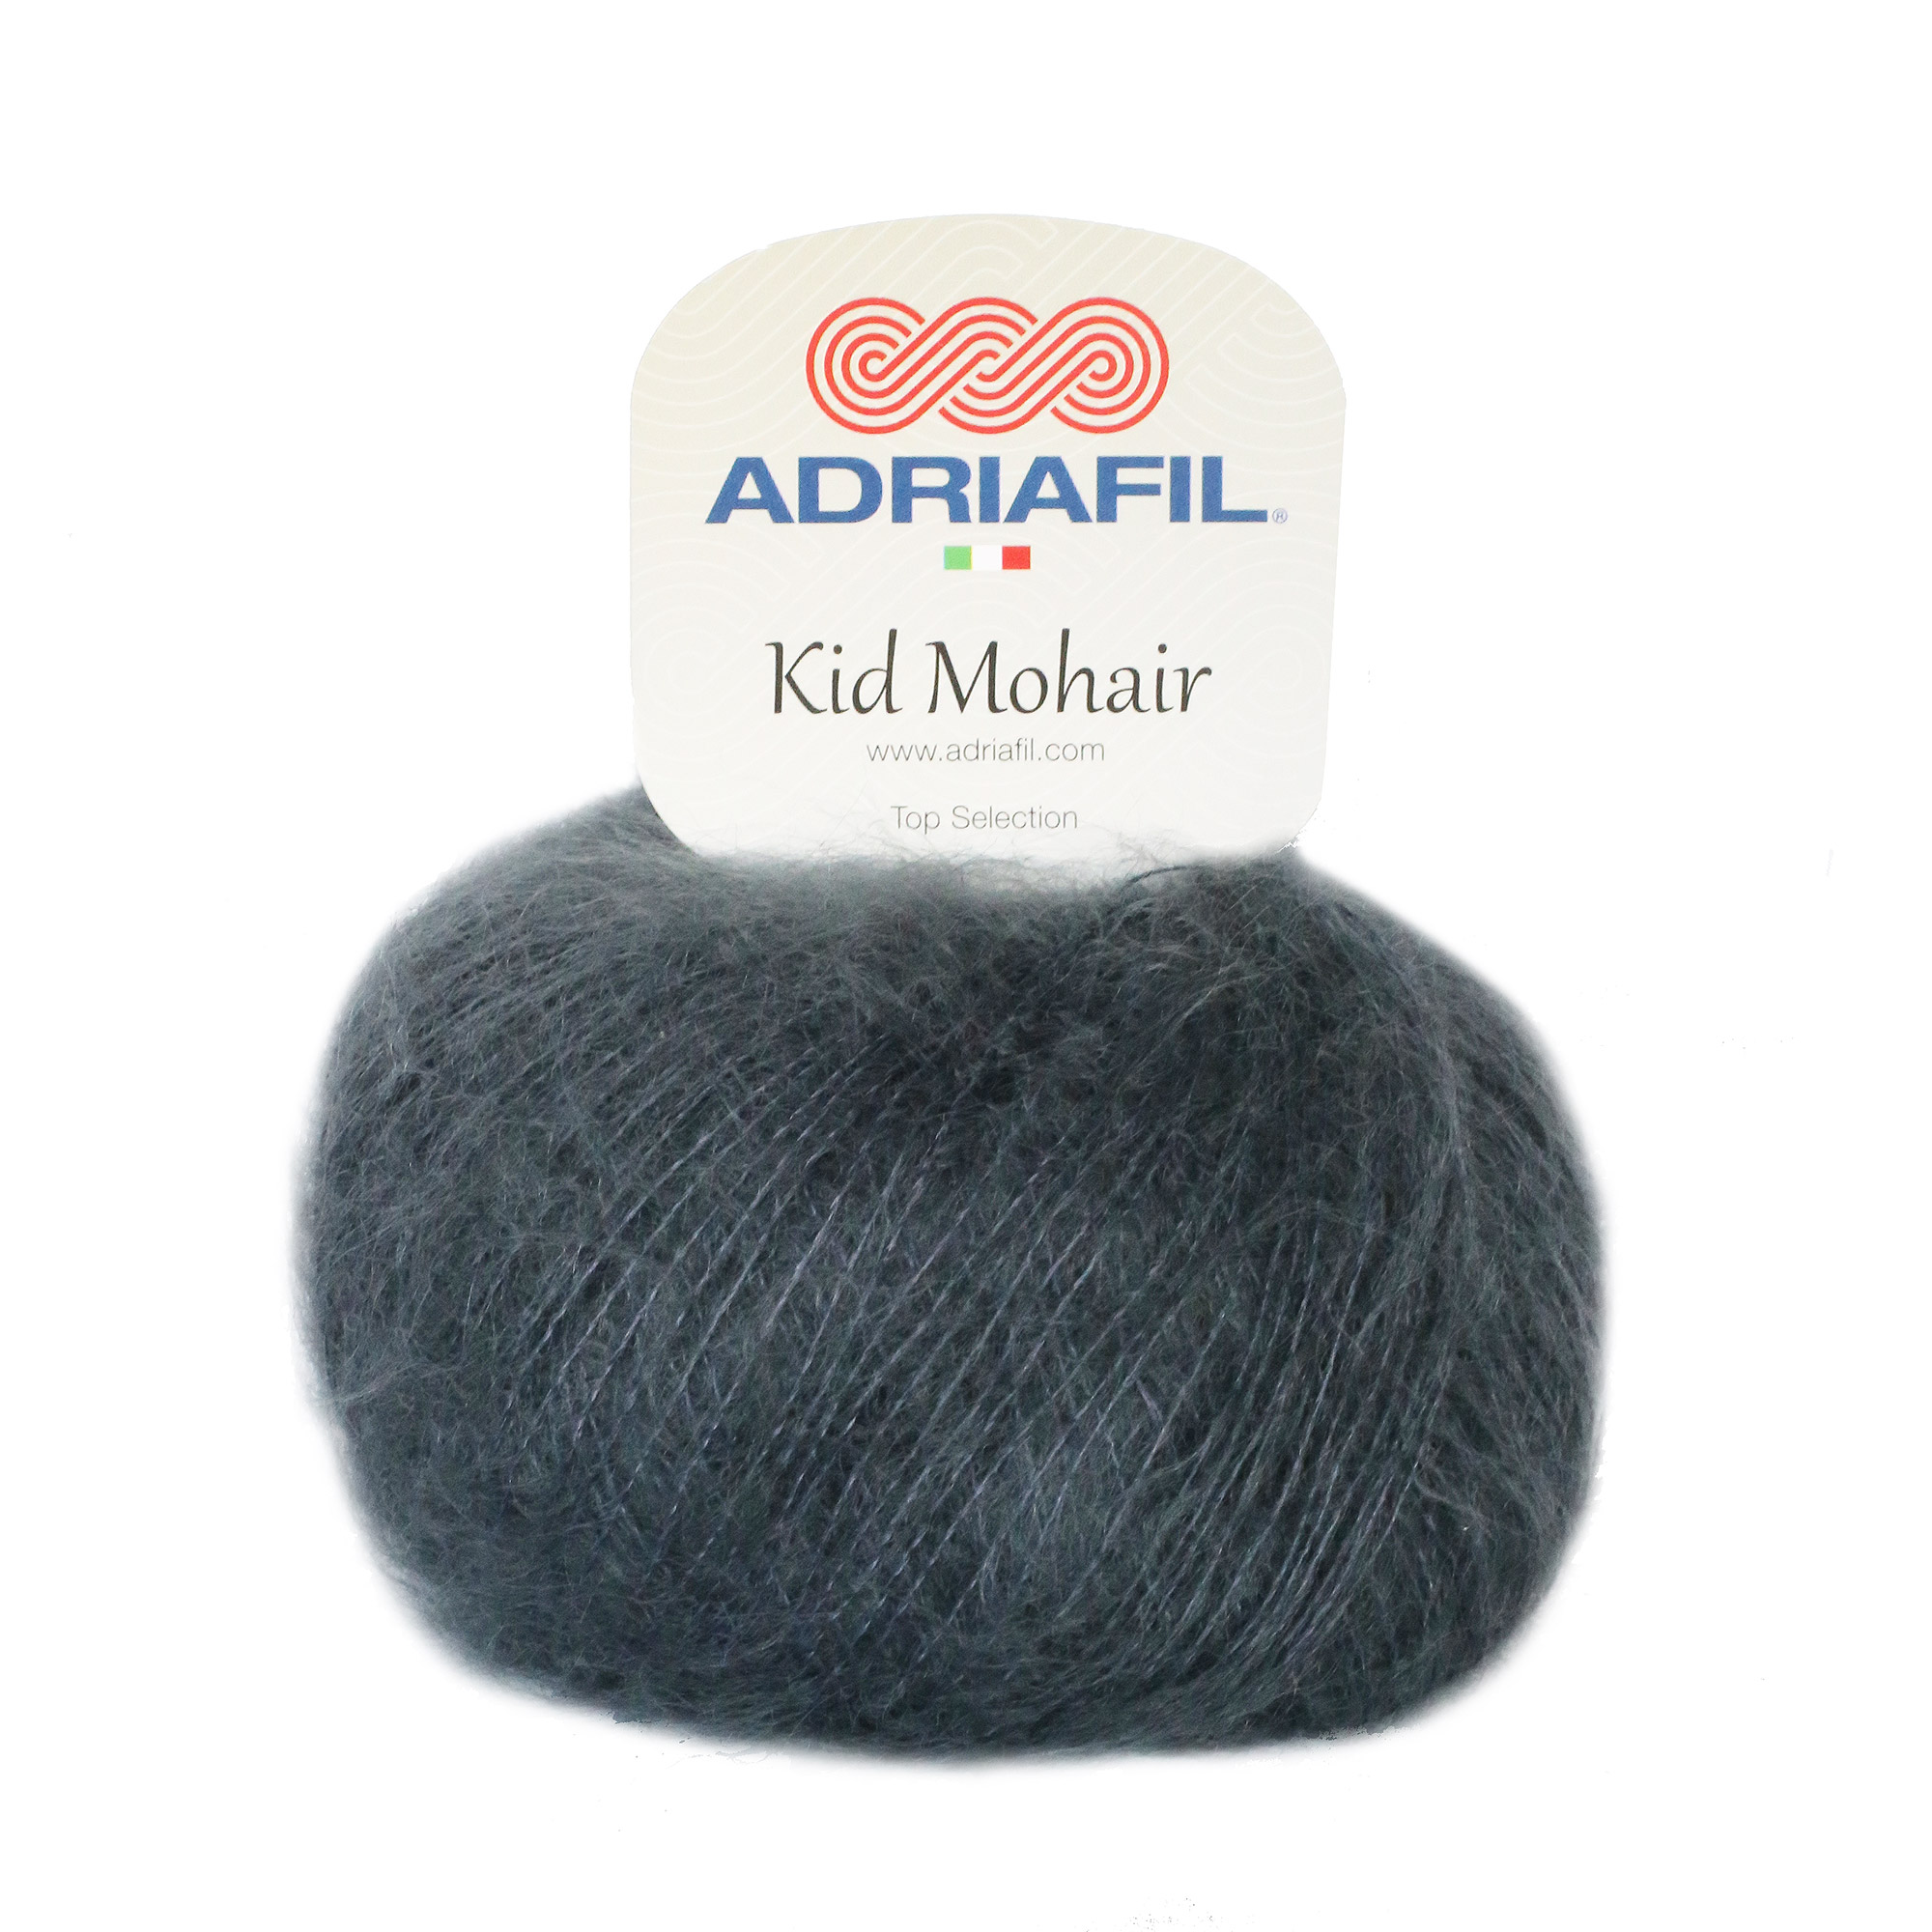 Buy ADRIAFIL KID MOHAIR From ADRIAFIL Online | Yarnstreet.com